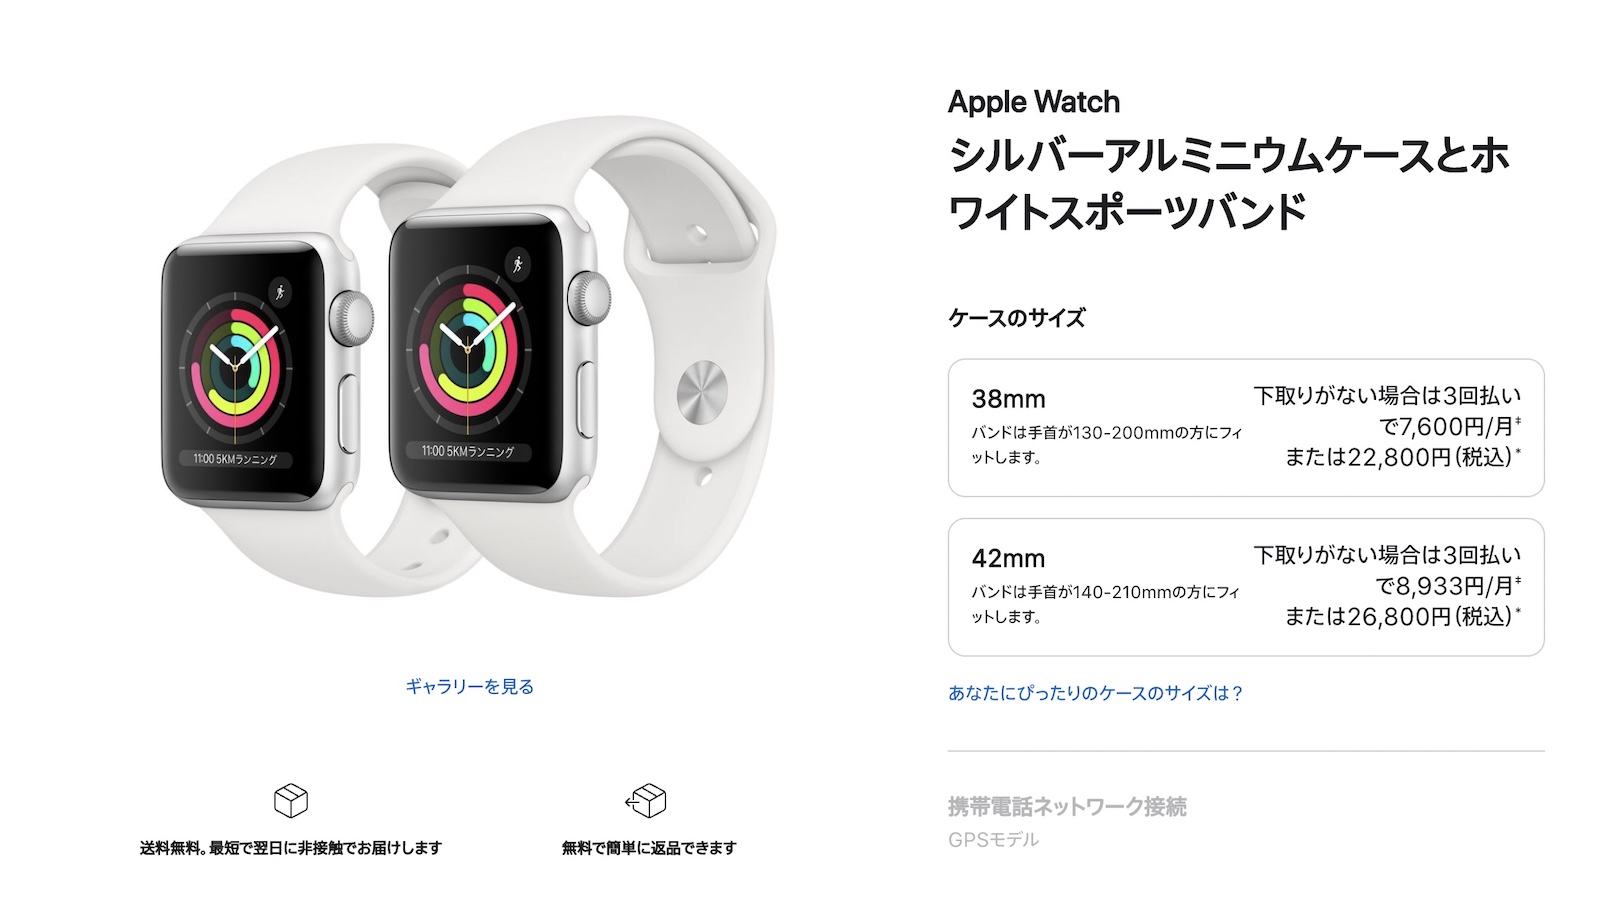 Apple Watch Series 3 apple store